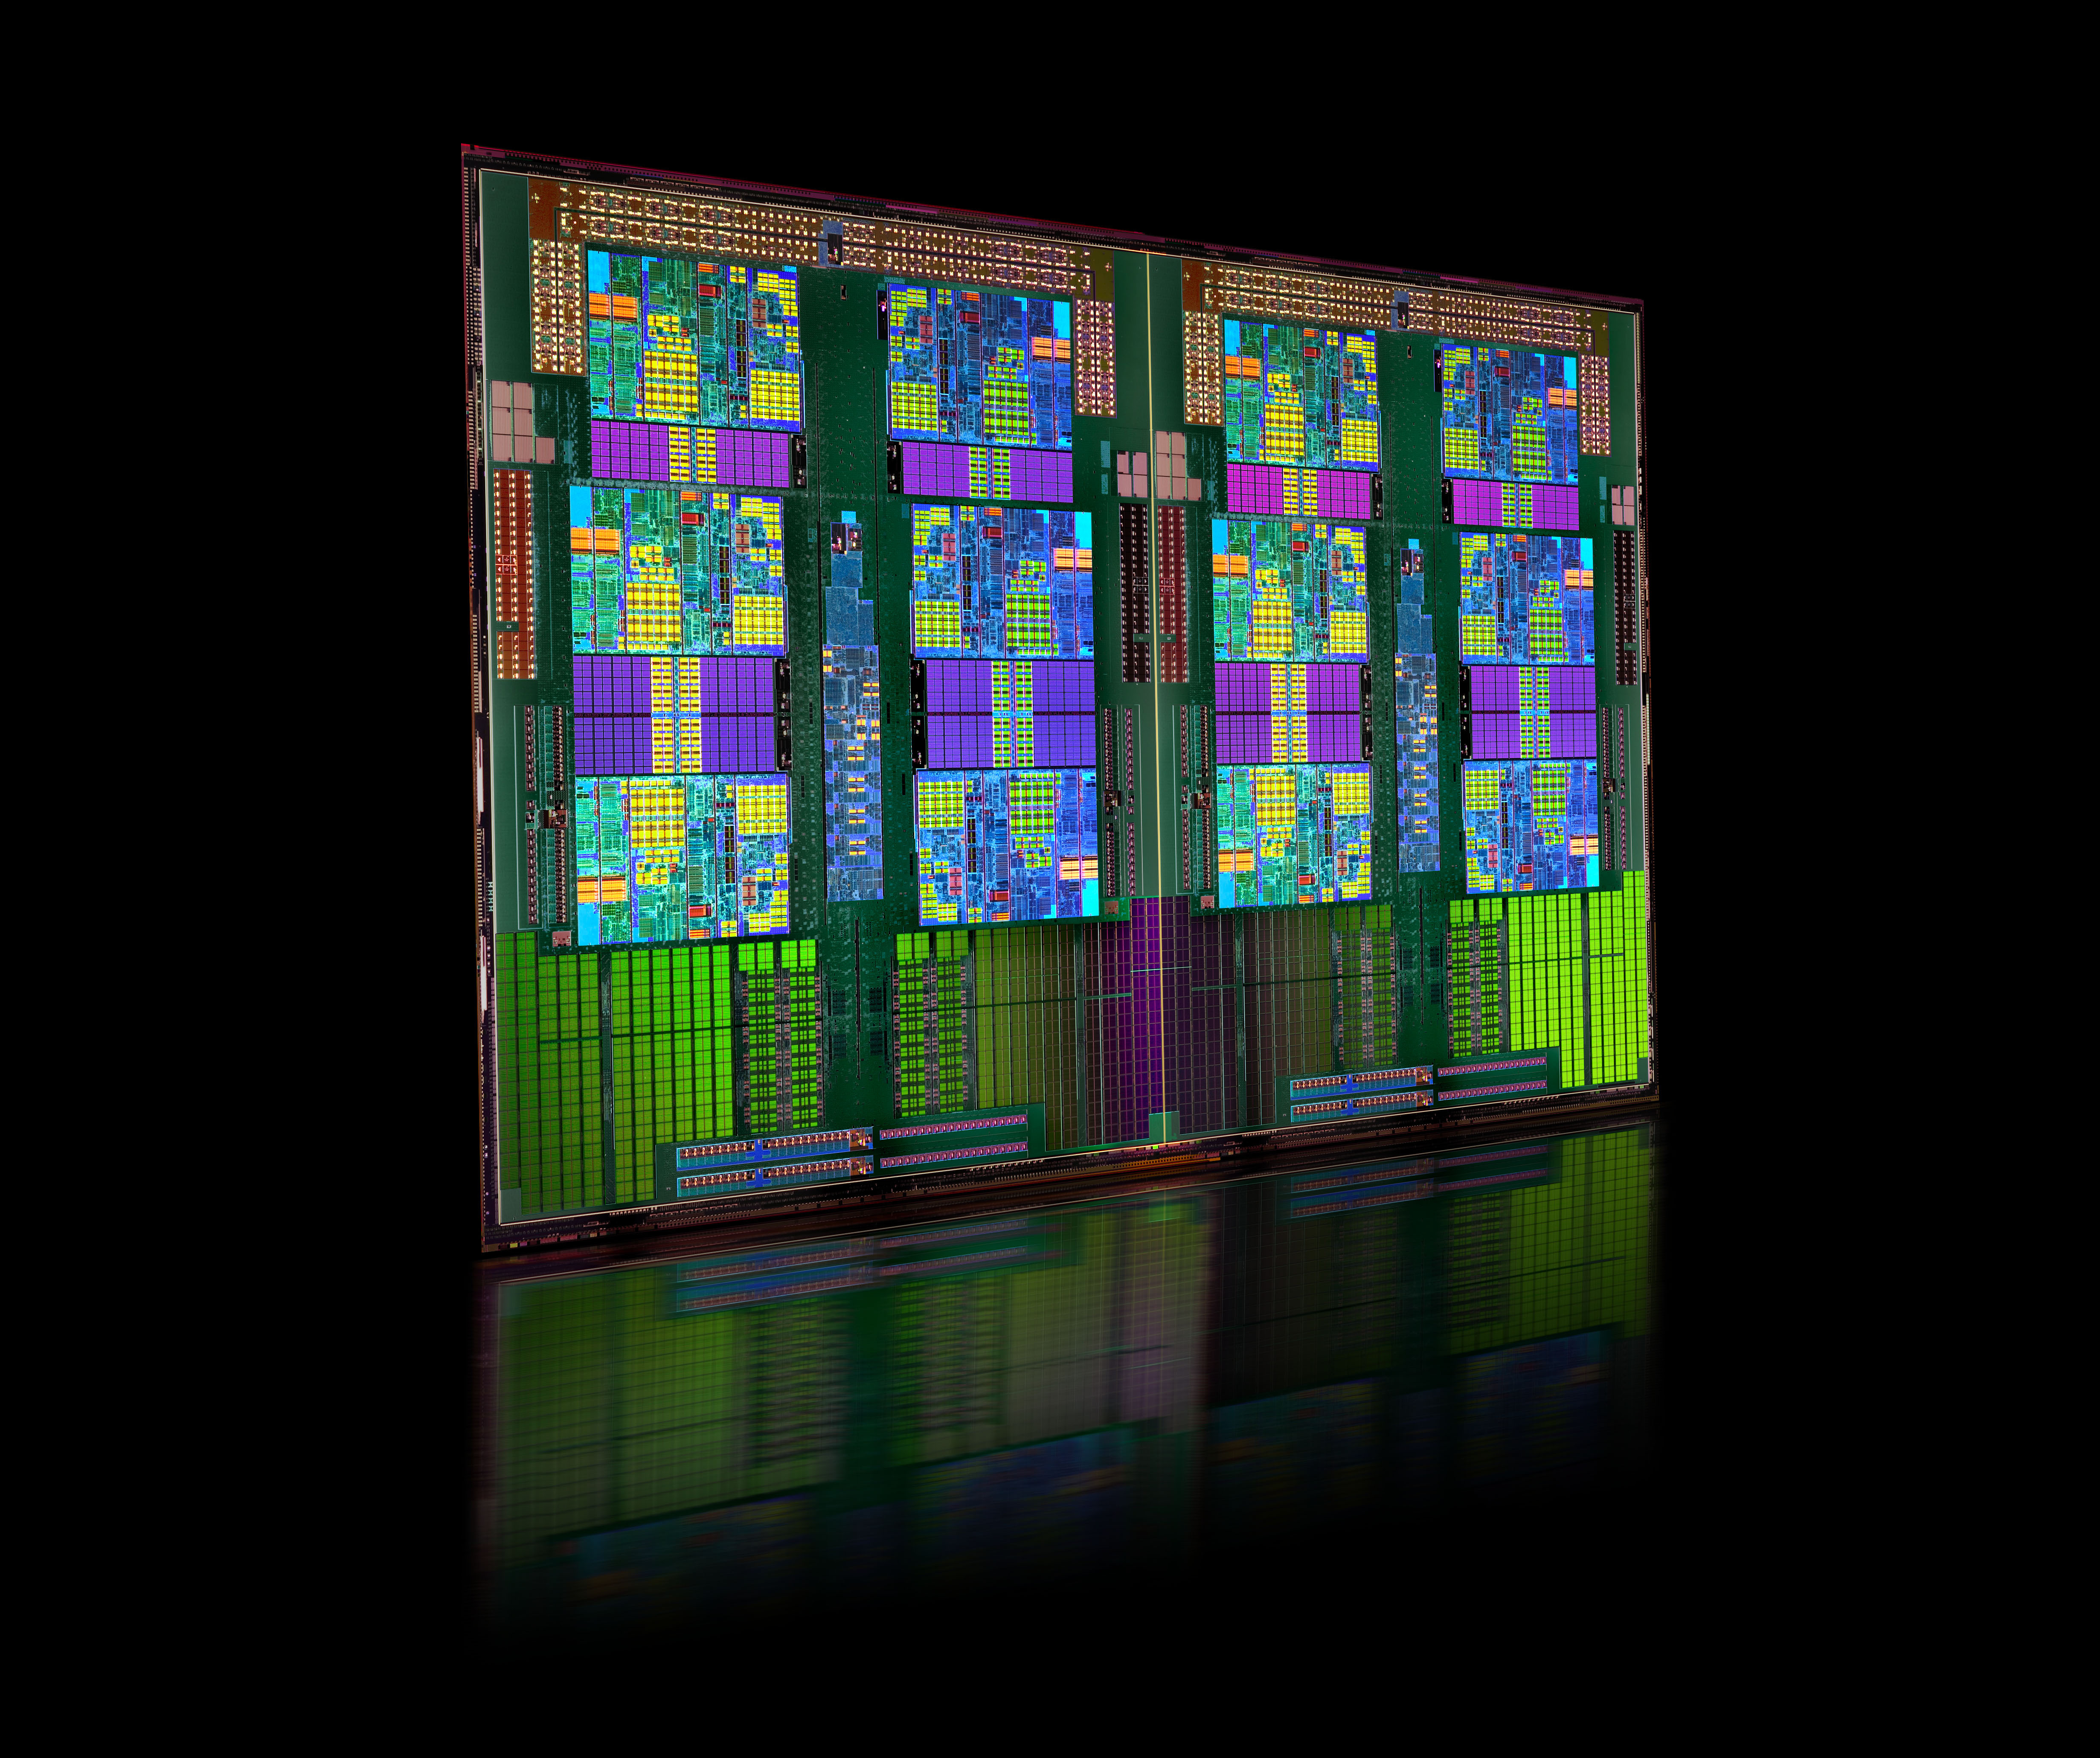 Pin Wallpaper Amd Core 4x Processor Hi Tech On